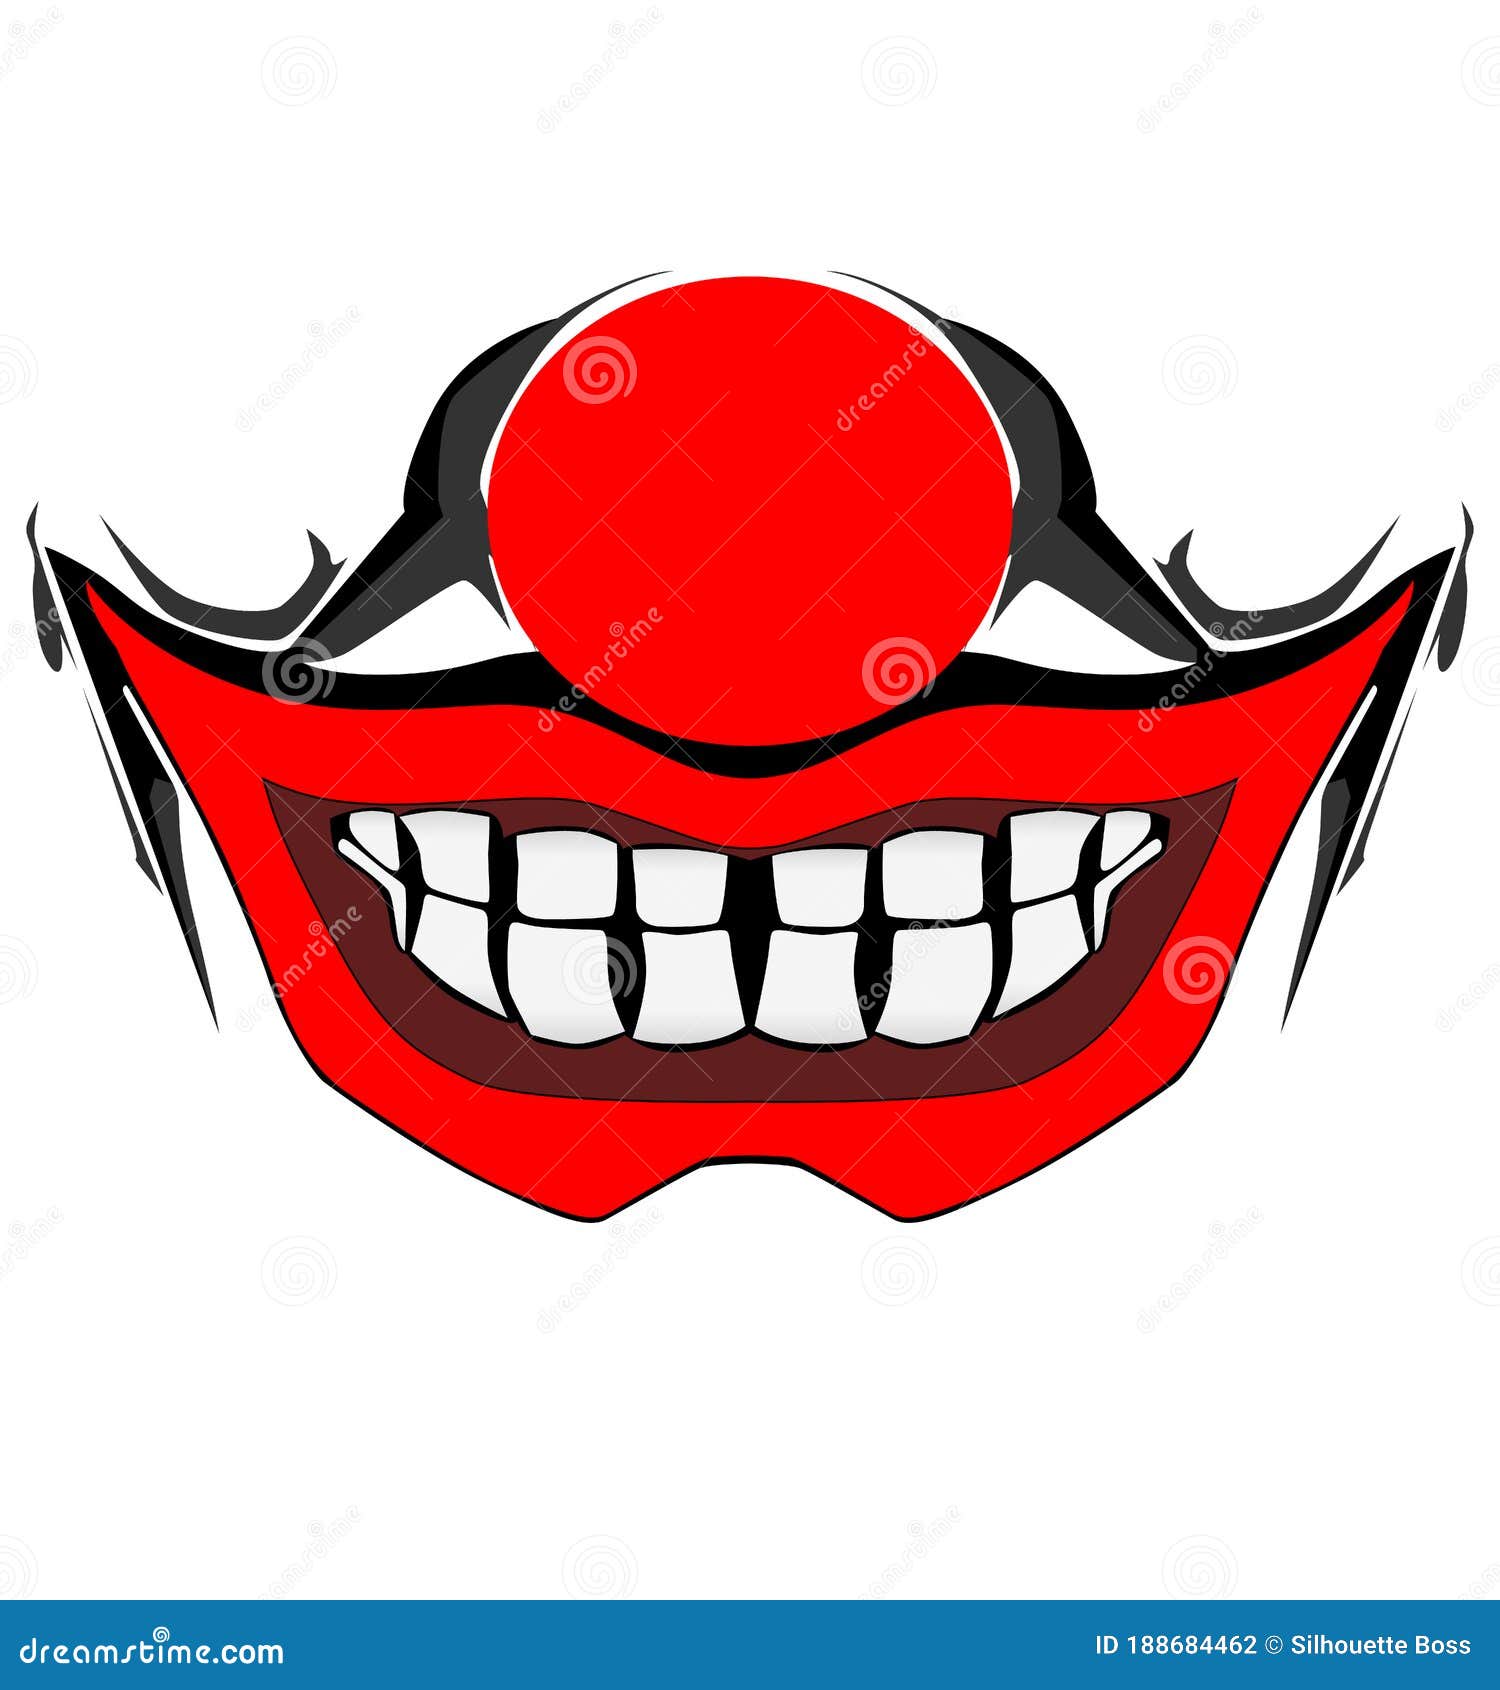 20+ Drawing Of Dark Evil Clown Face Scary Joker Smile Illustrations,  Royalty-Free Vector Graphics & Clip Art - iStock